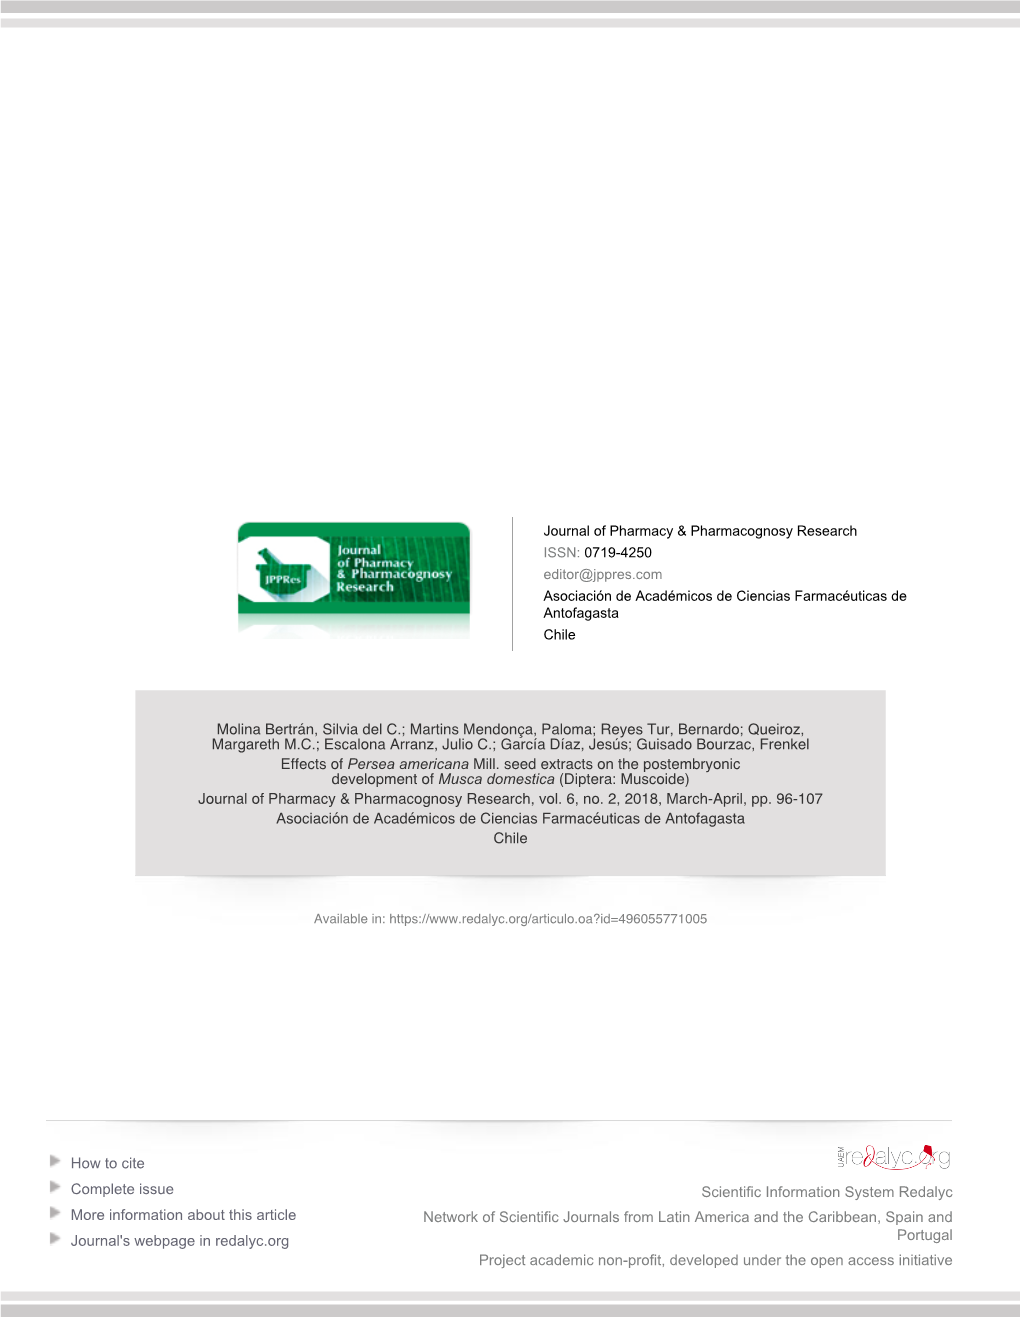 Diptera: Muscoide) Journal of Pharmacy & Pharmacognosy Research, Vol